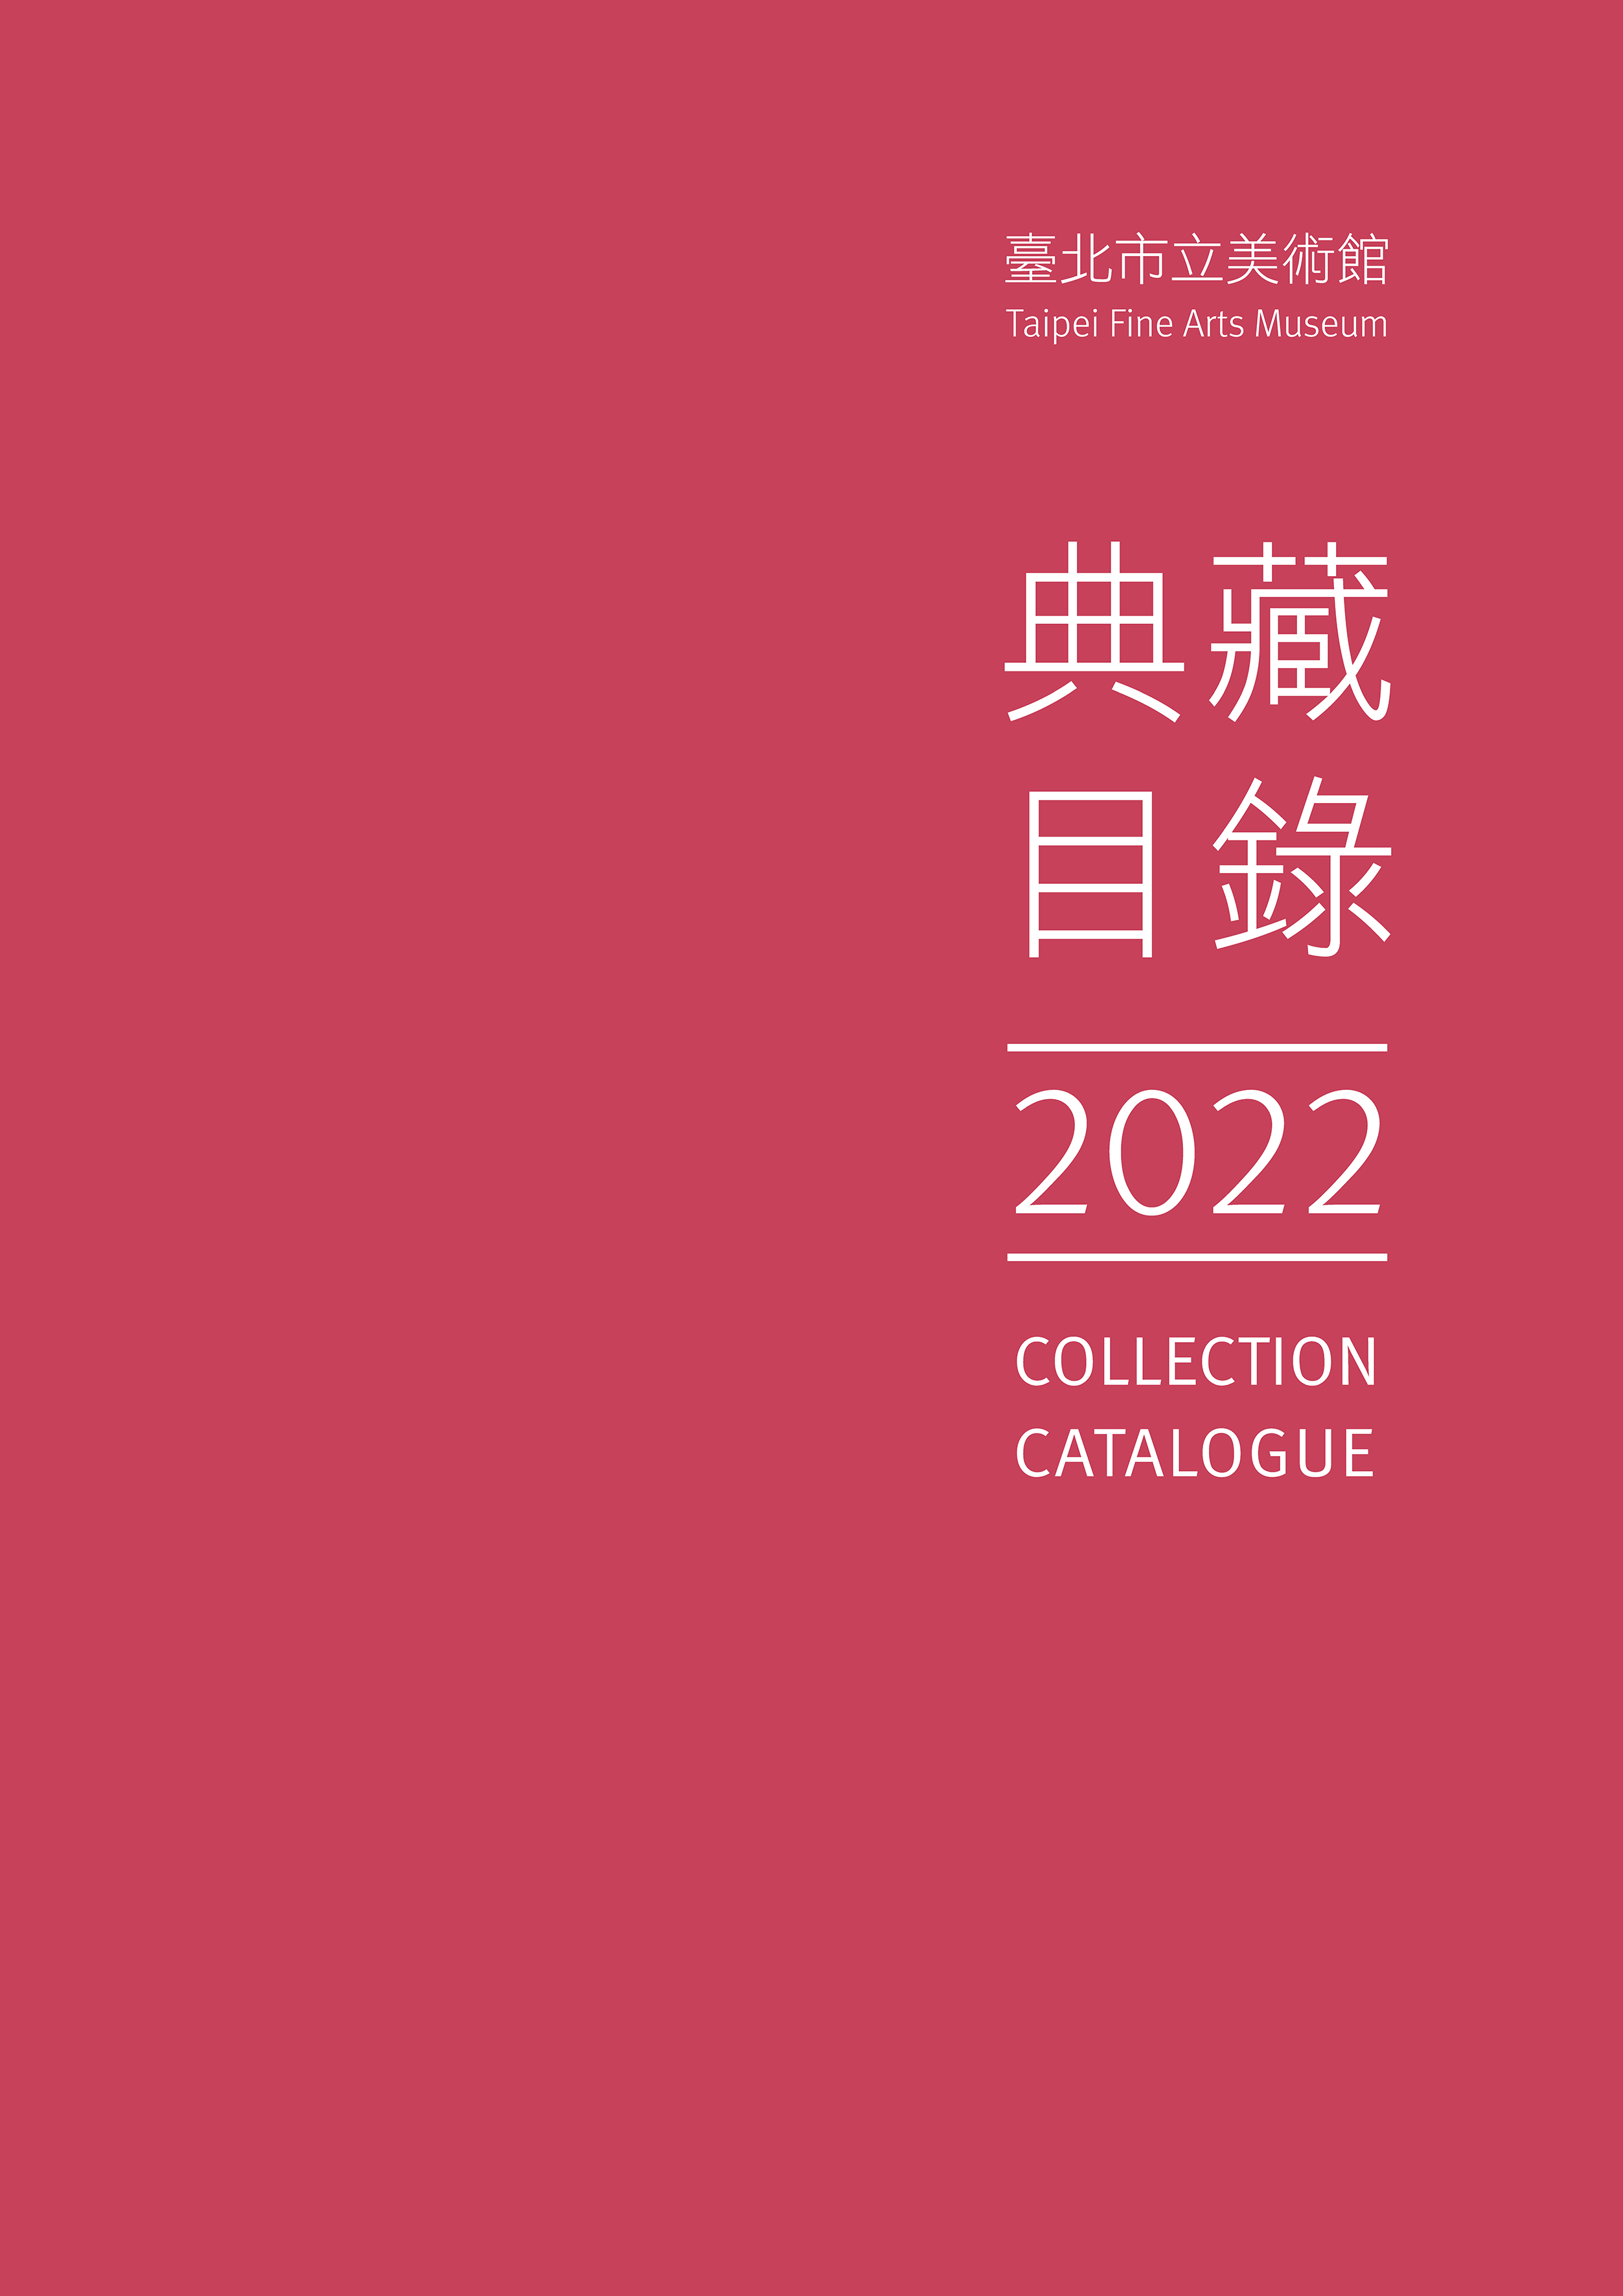 Collection Catalogue 2022 的圖說